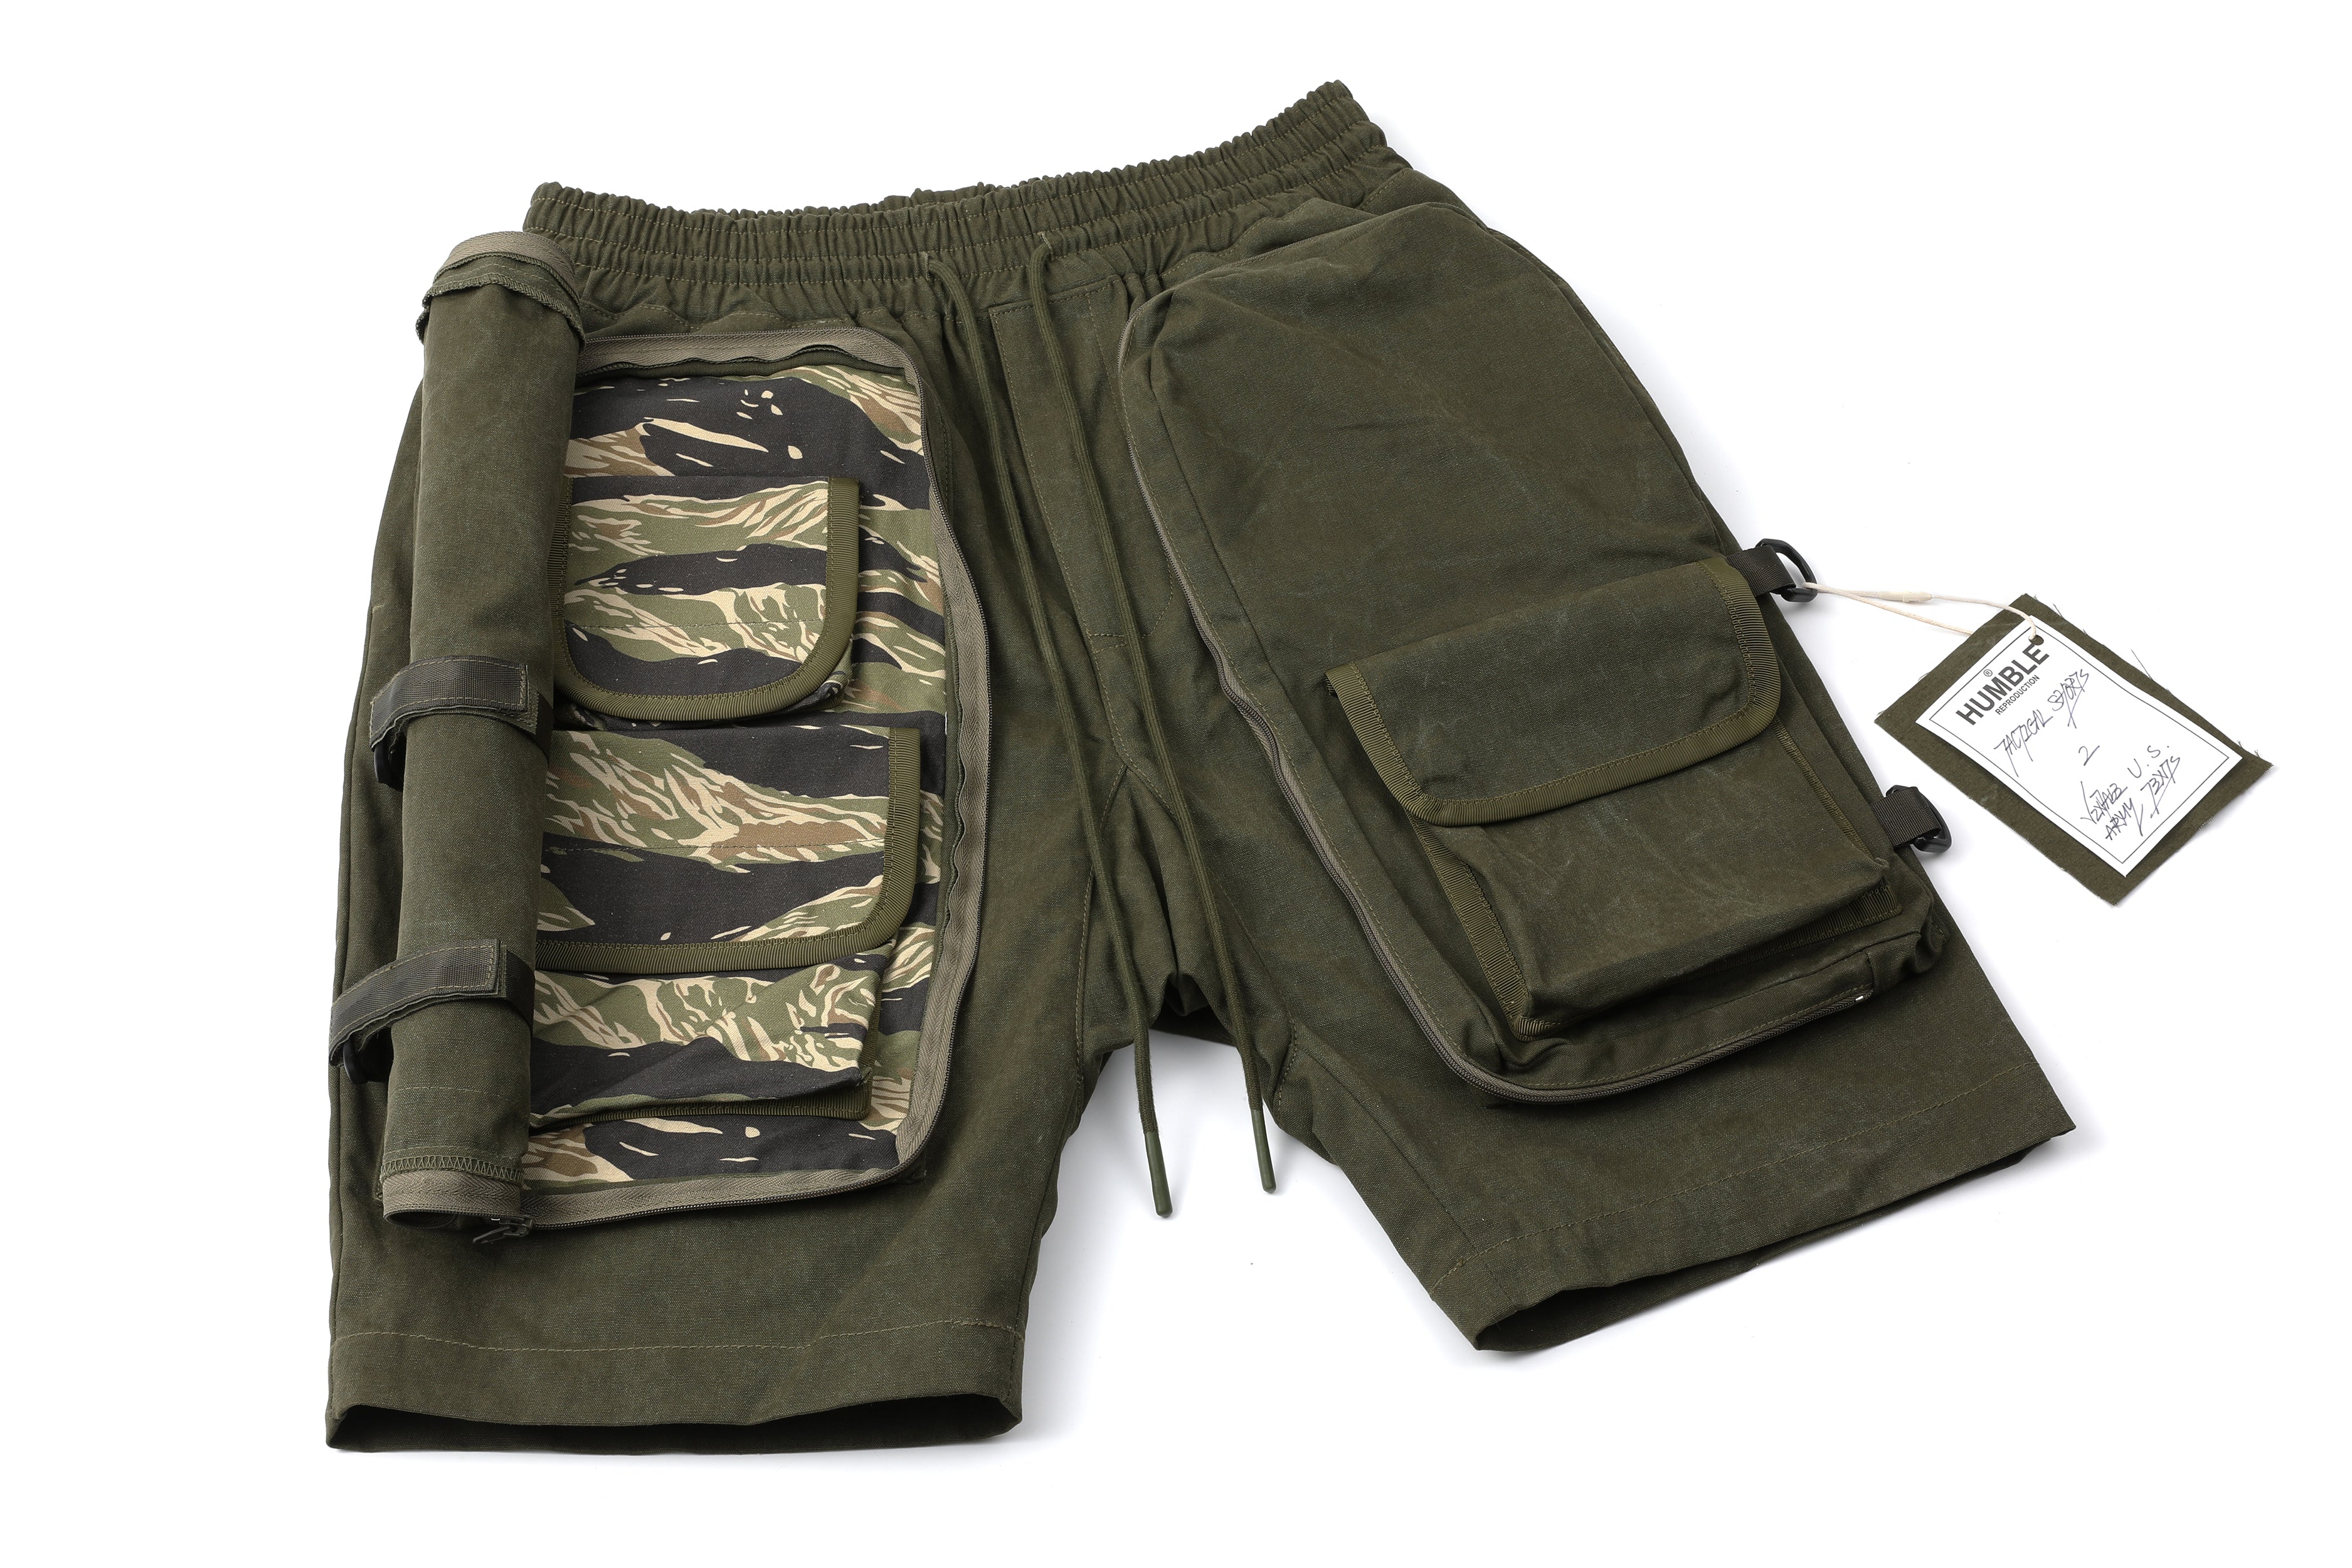 Tactical Shorts